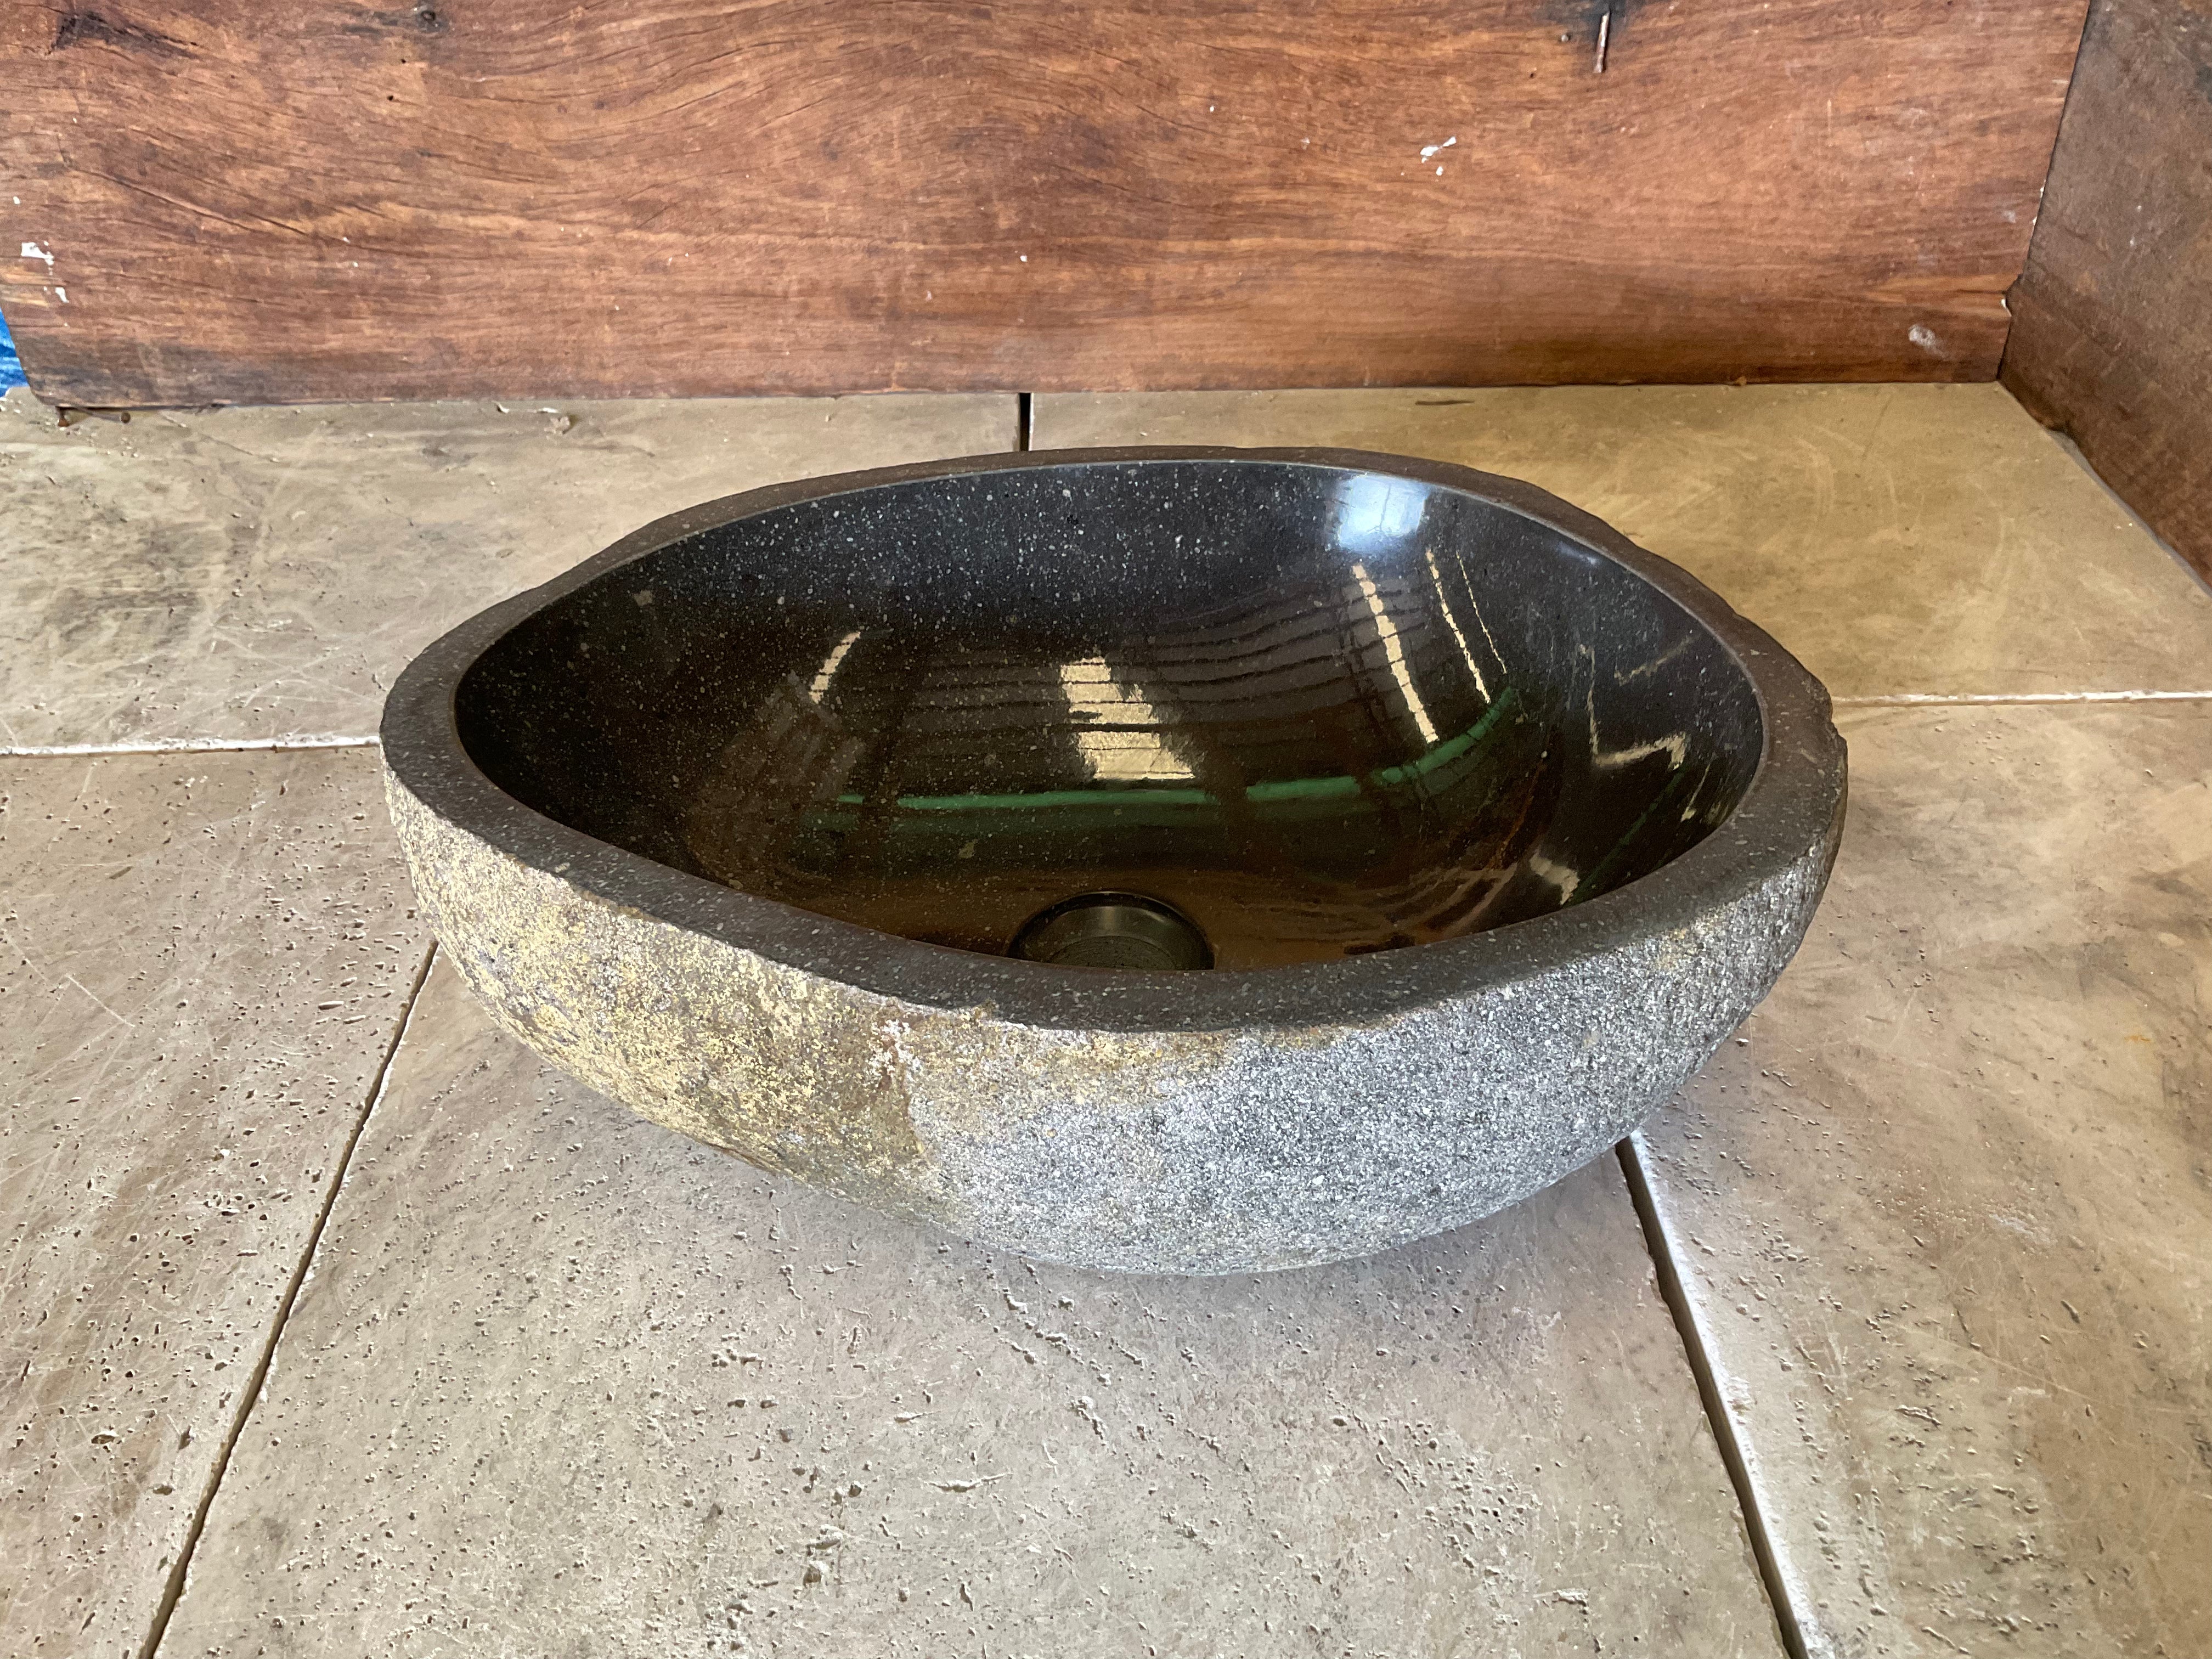 Handmade Natural Oval River Stone  Bathroom Basin  - RM 2310162